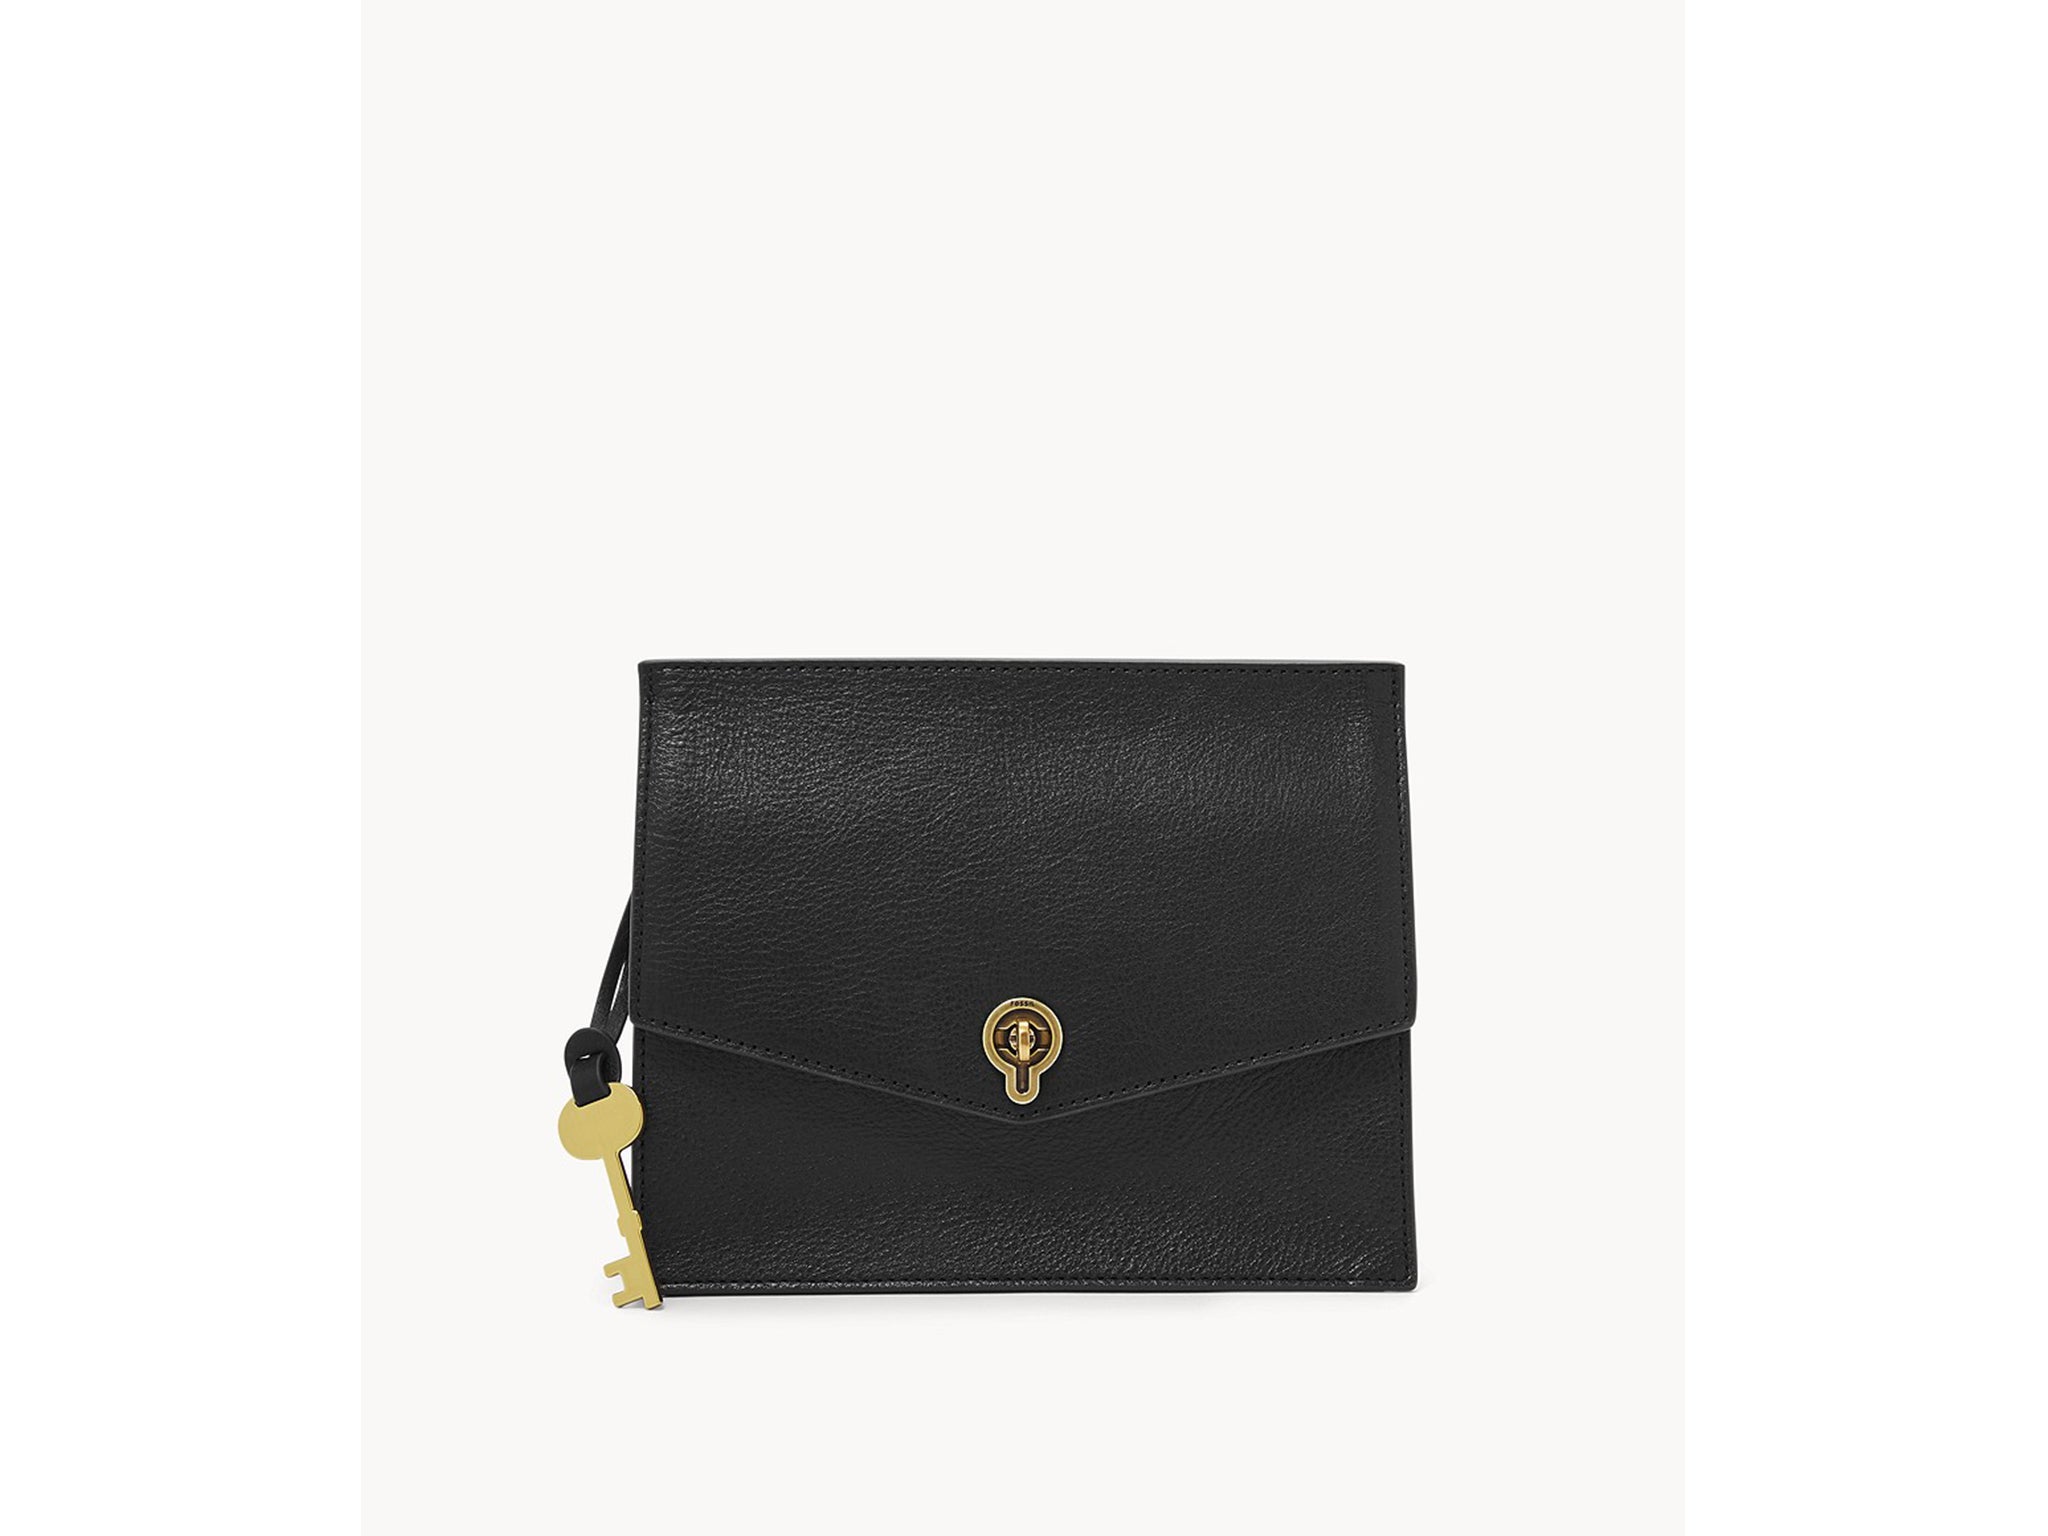 Kate Middleton's favourite black handbag and similar cheaper styles